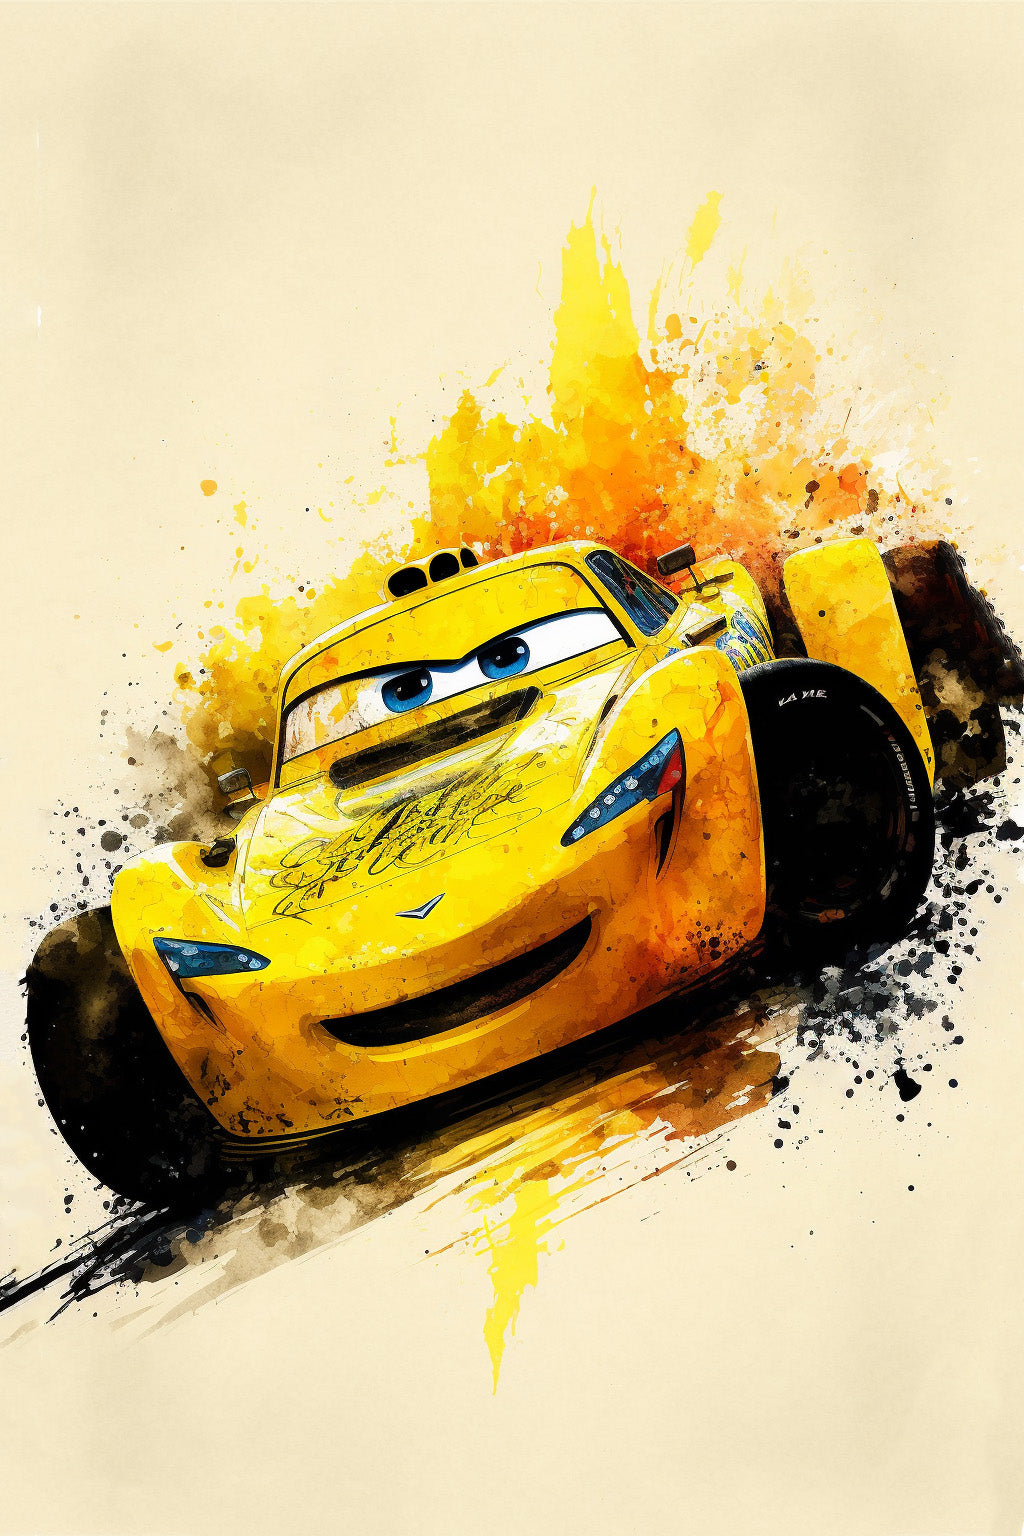 tableau voiture de course cars disney jaune